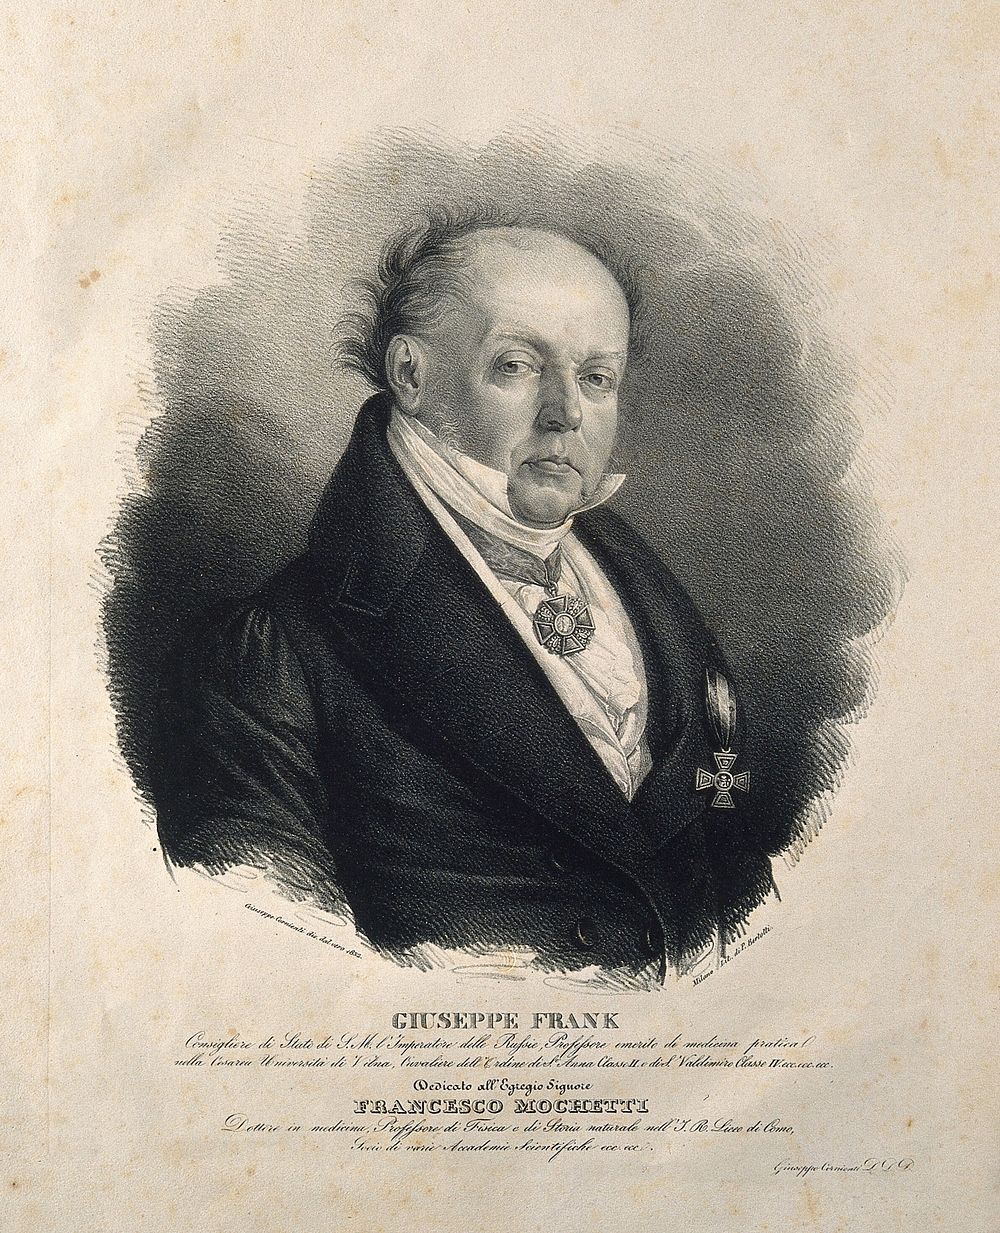 Joseph Frank. Lithograph by G. Cornienti, 1832.